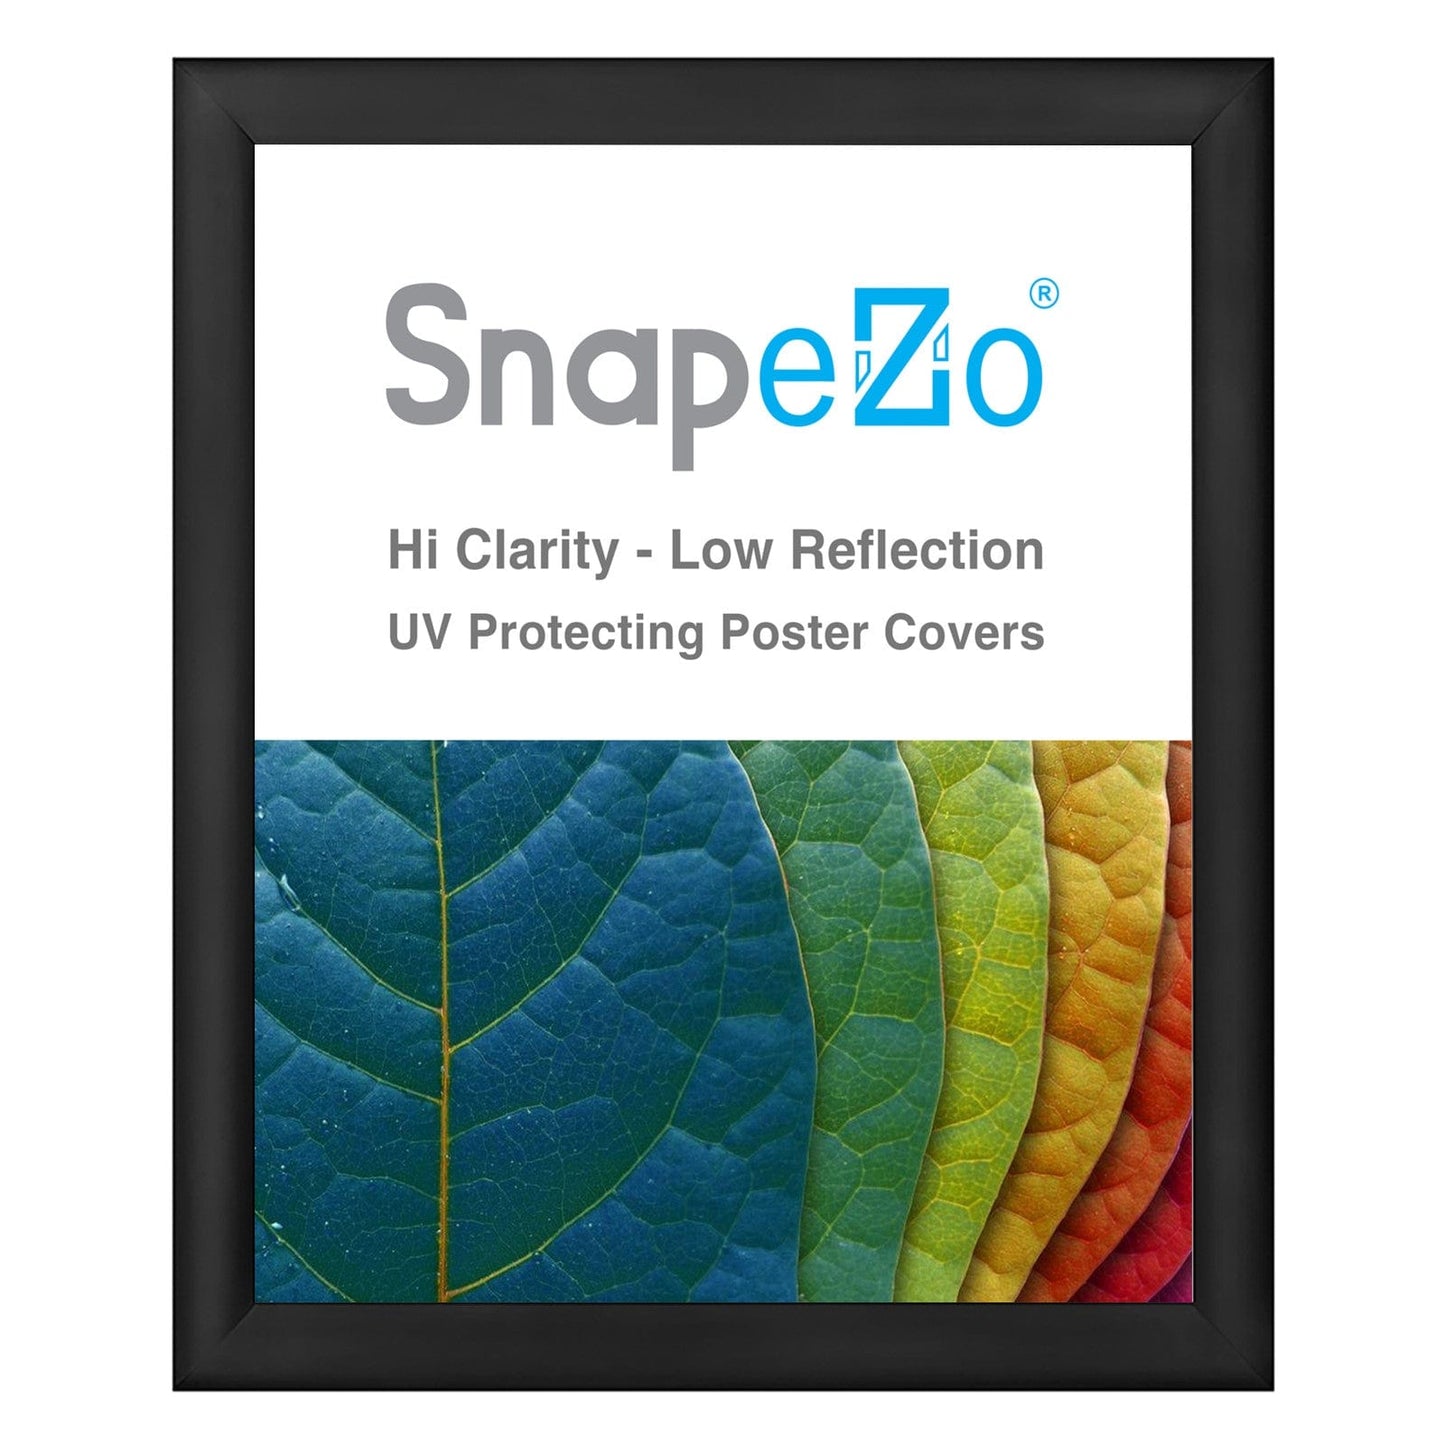 25x31 Black SnapeZo® Snap Frame - 1.2" Profile - Snap Frames Direct